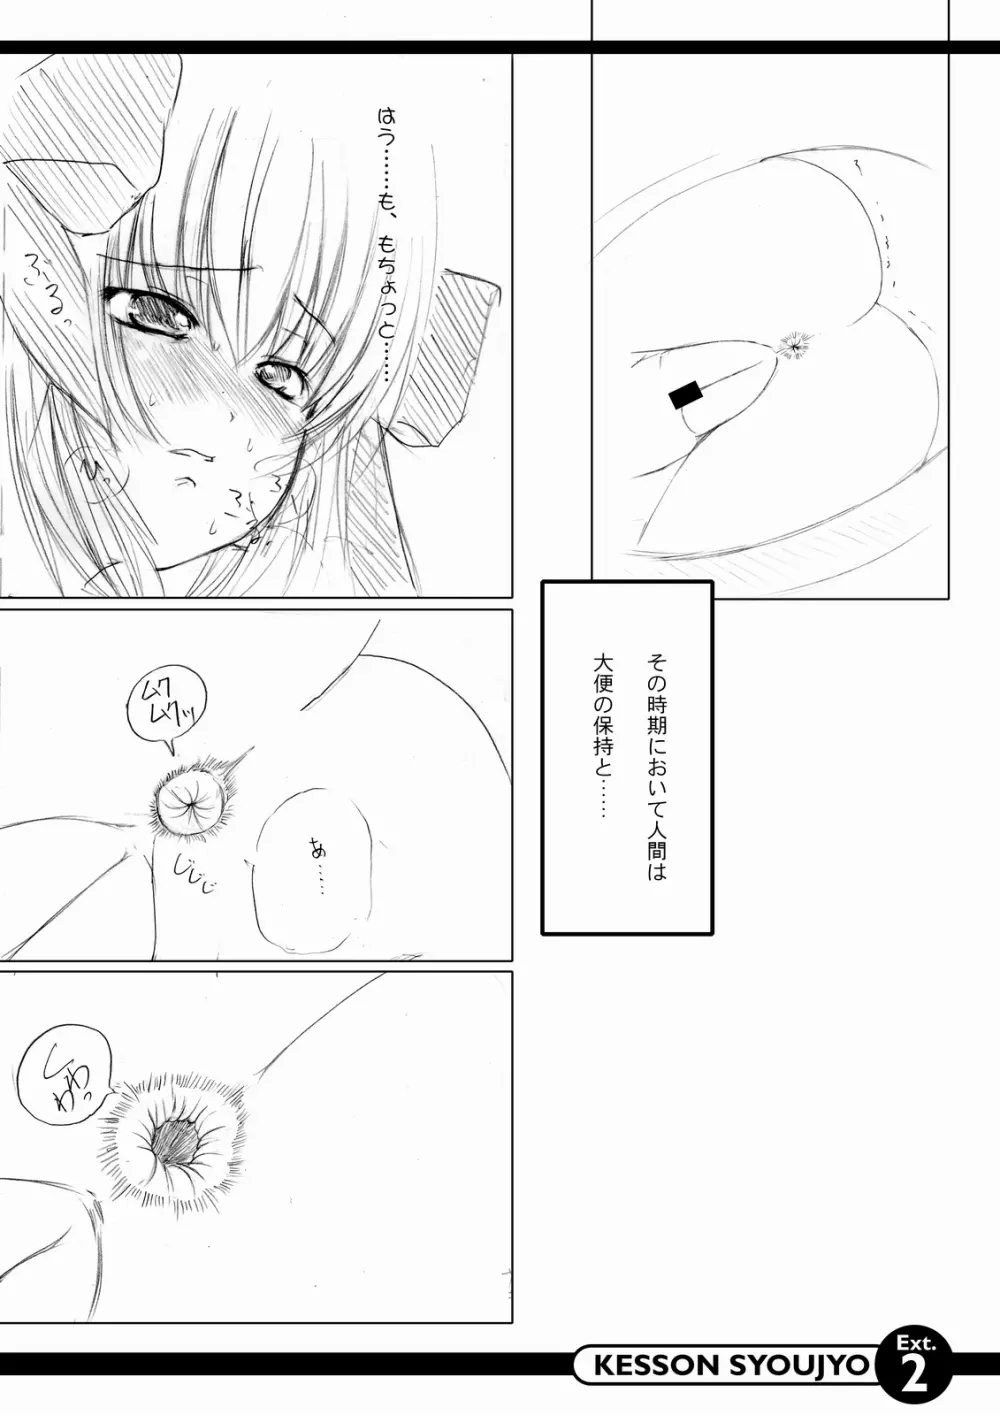 extra.2 純粋淫性批判 8ページ